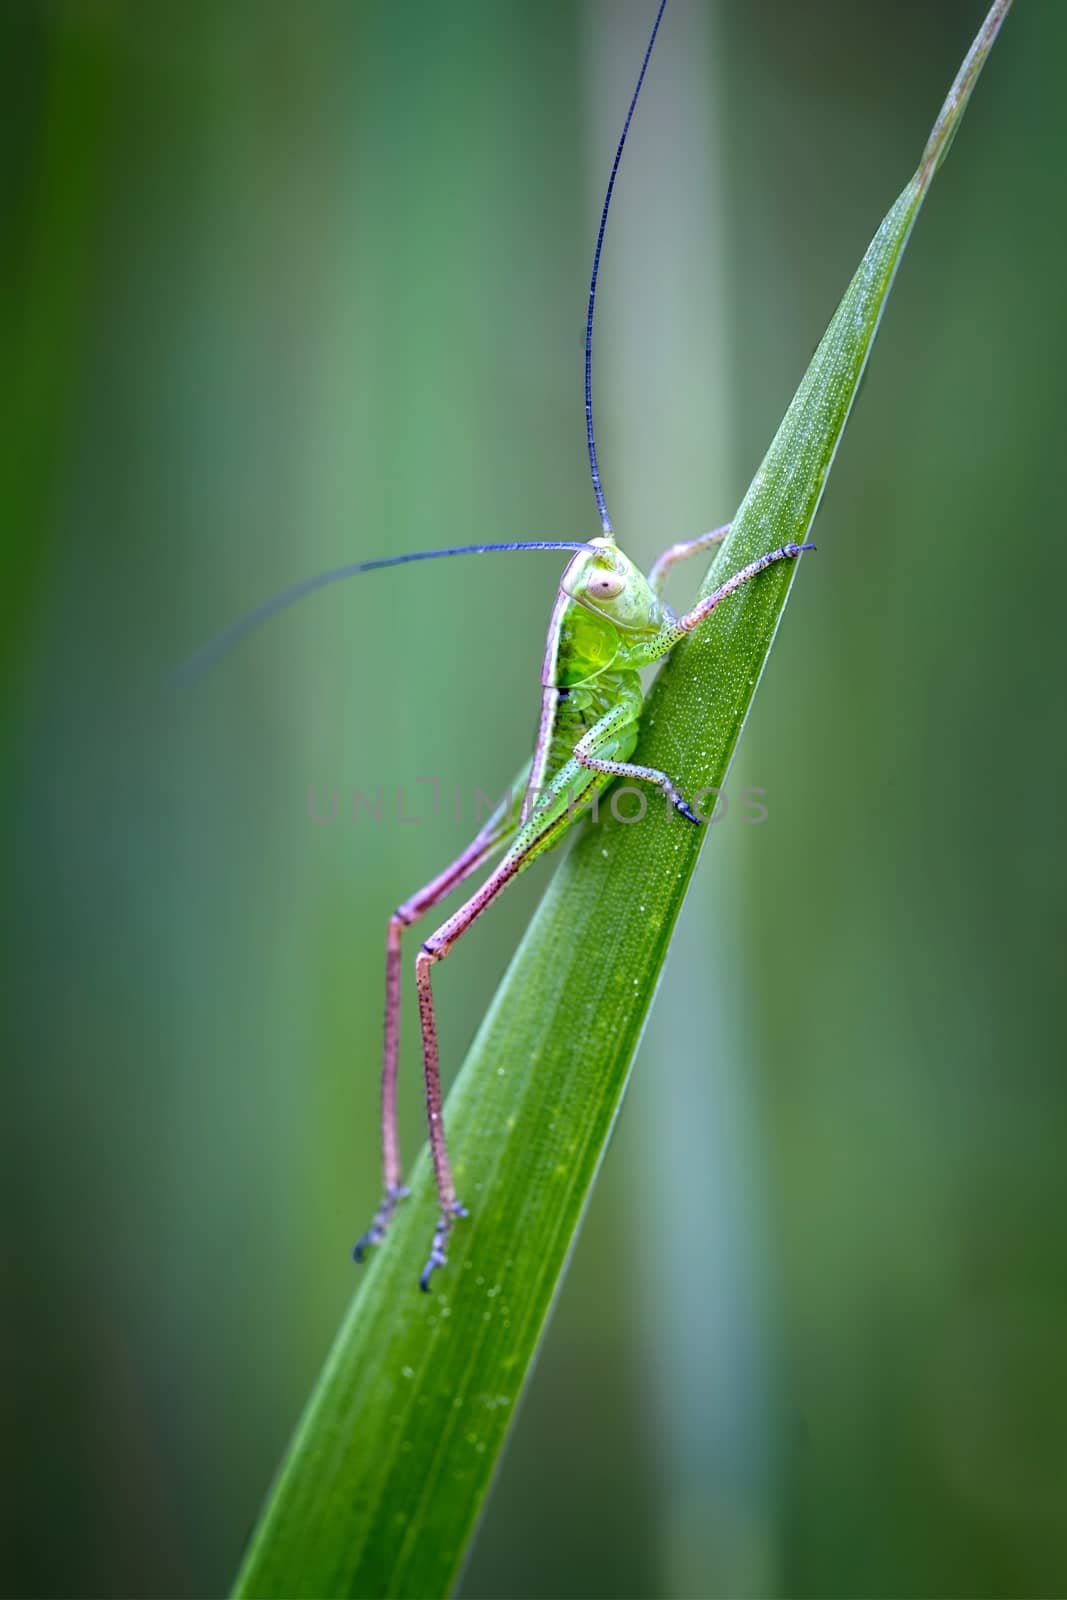 Small green grasshopper on the grass by Digoarpi